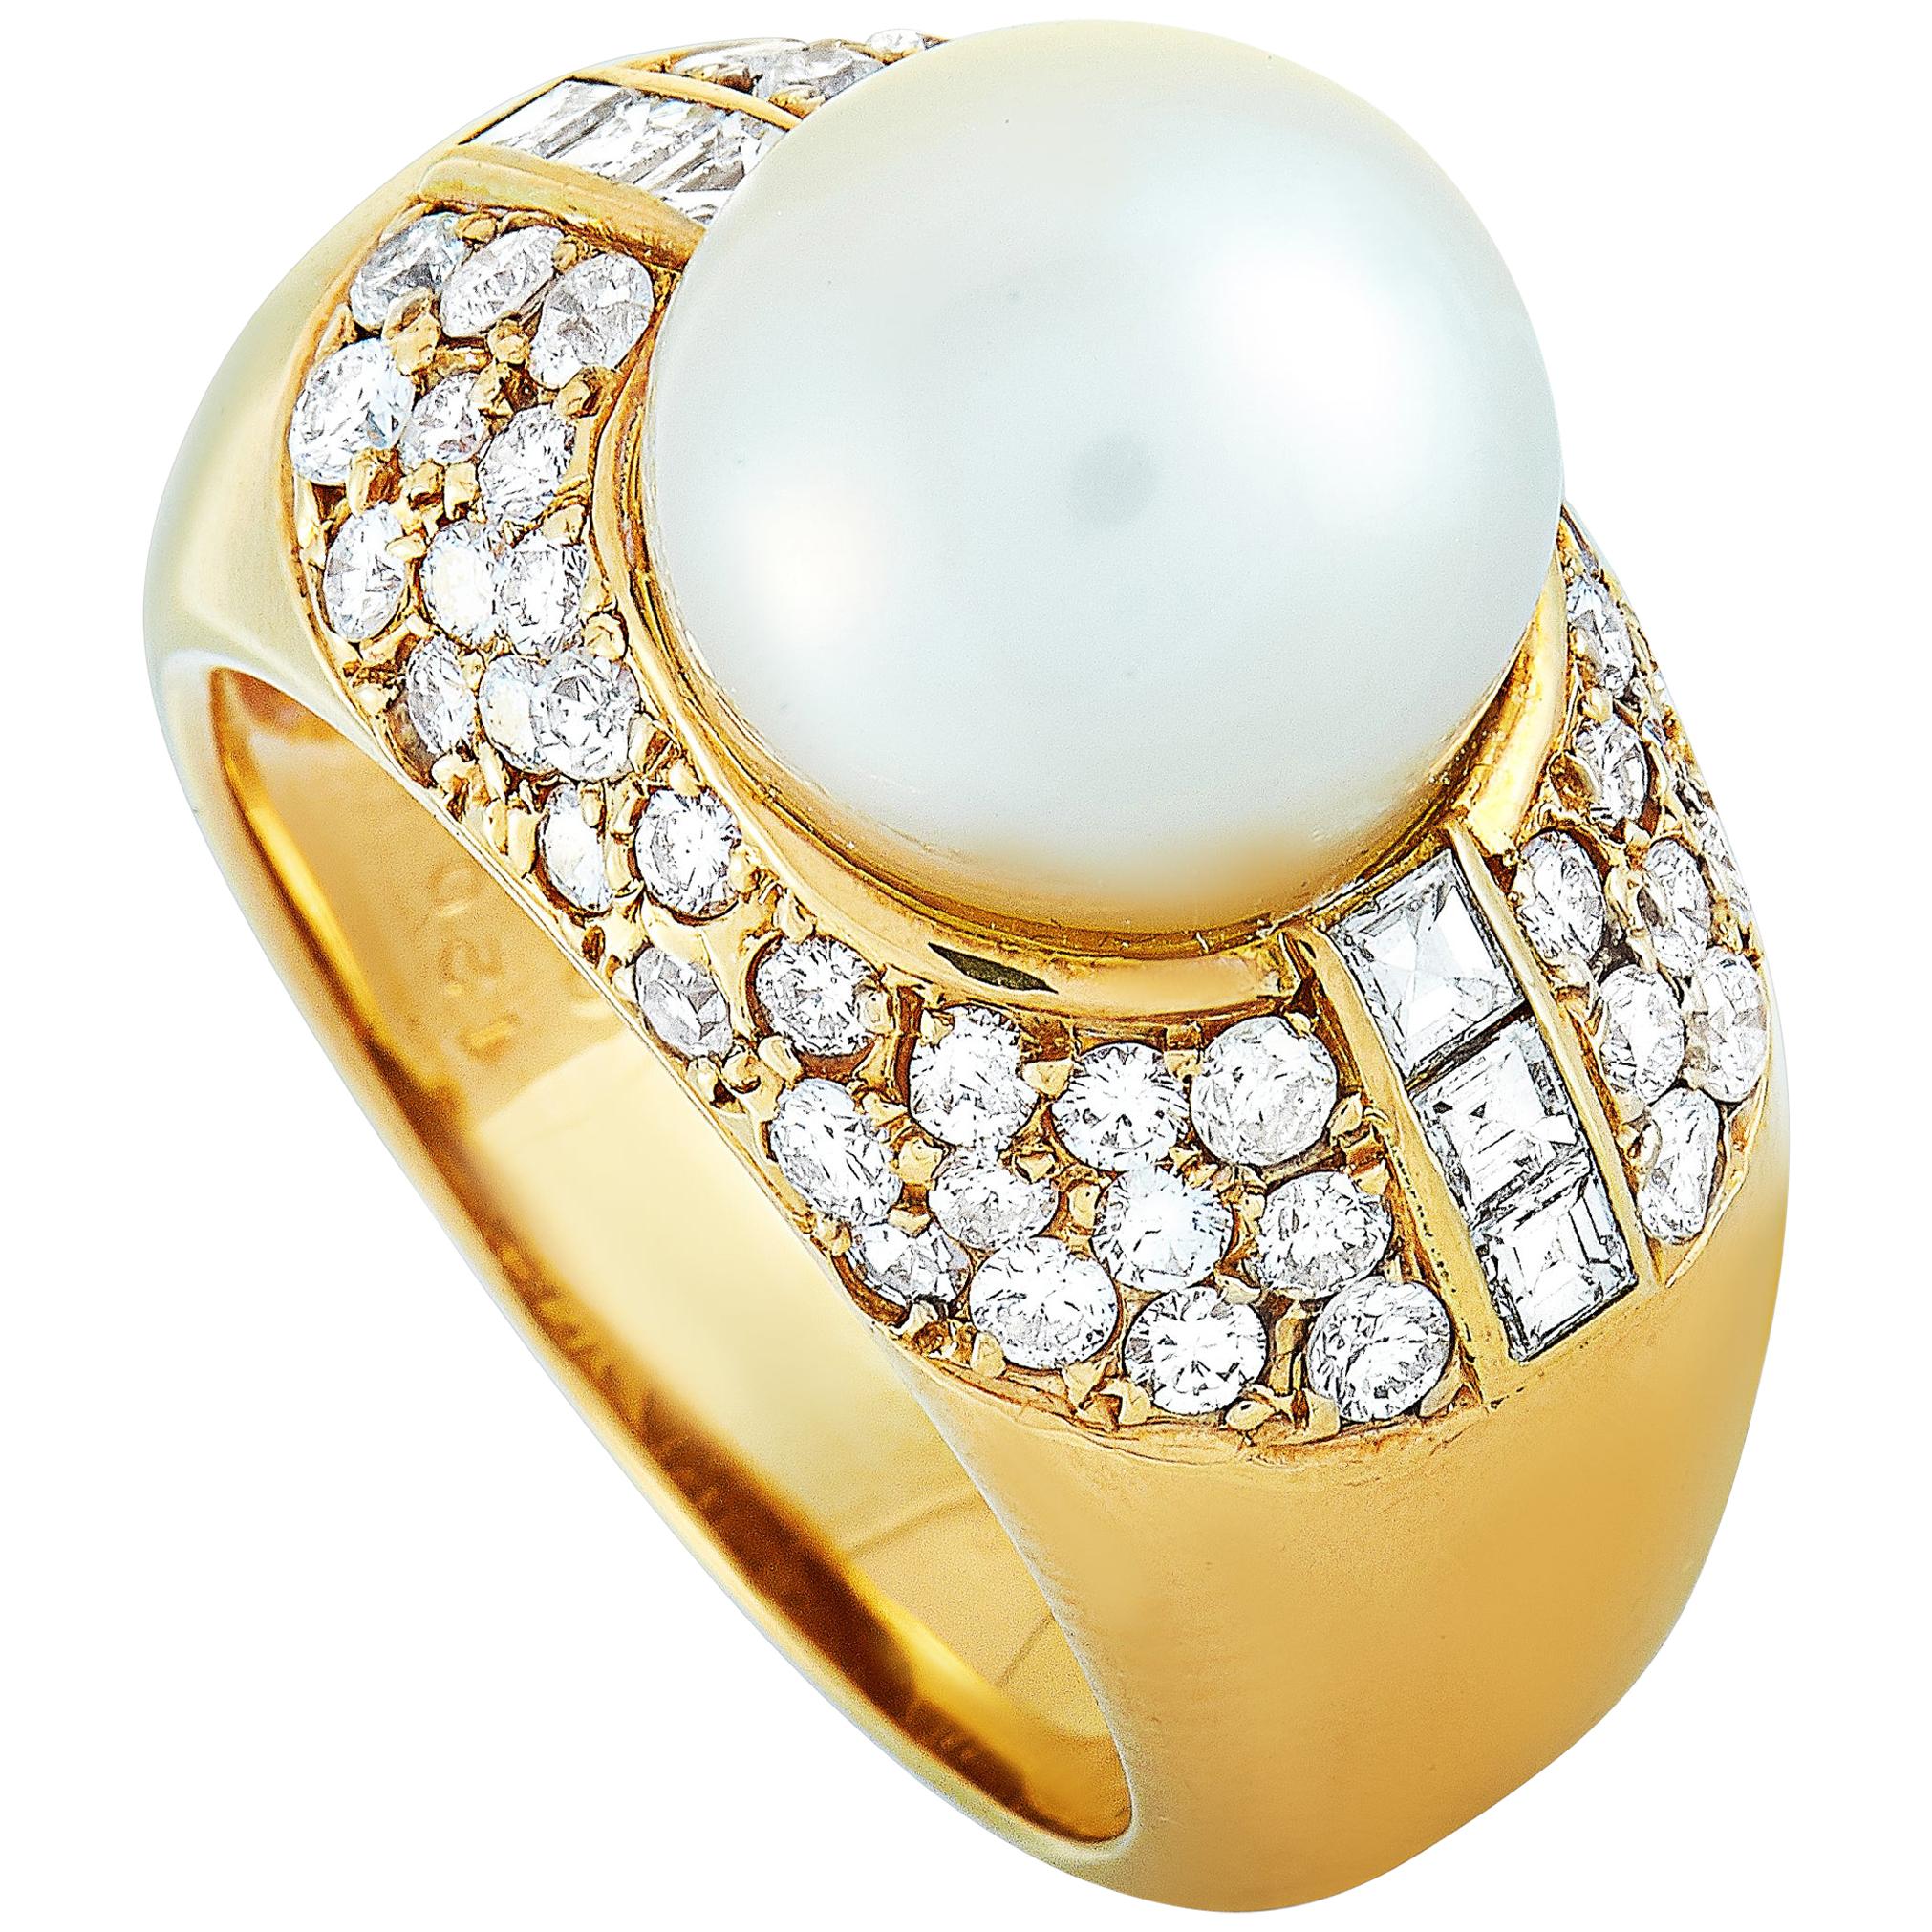 LB Exclusive 18 Karat Yellow Gold 1.51 Carat Diamond and Pearl Ring